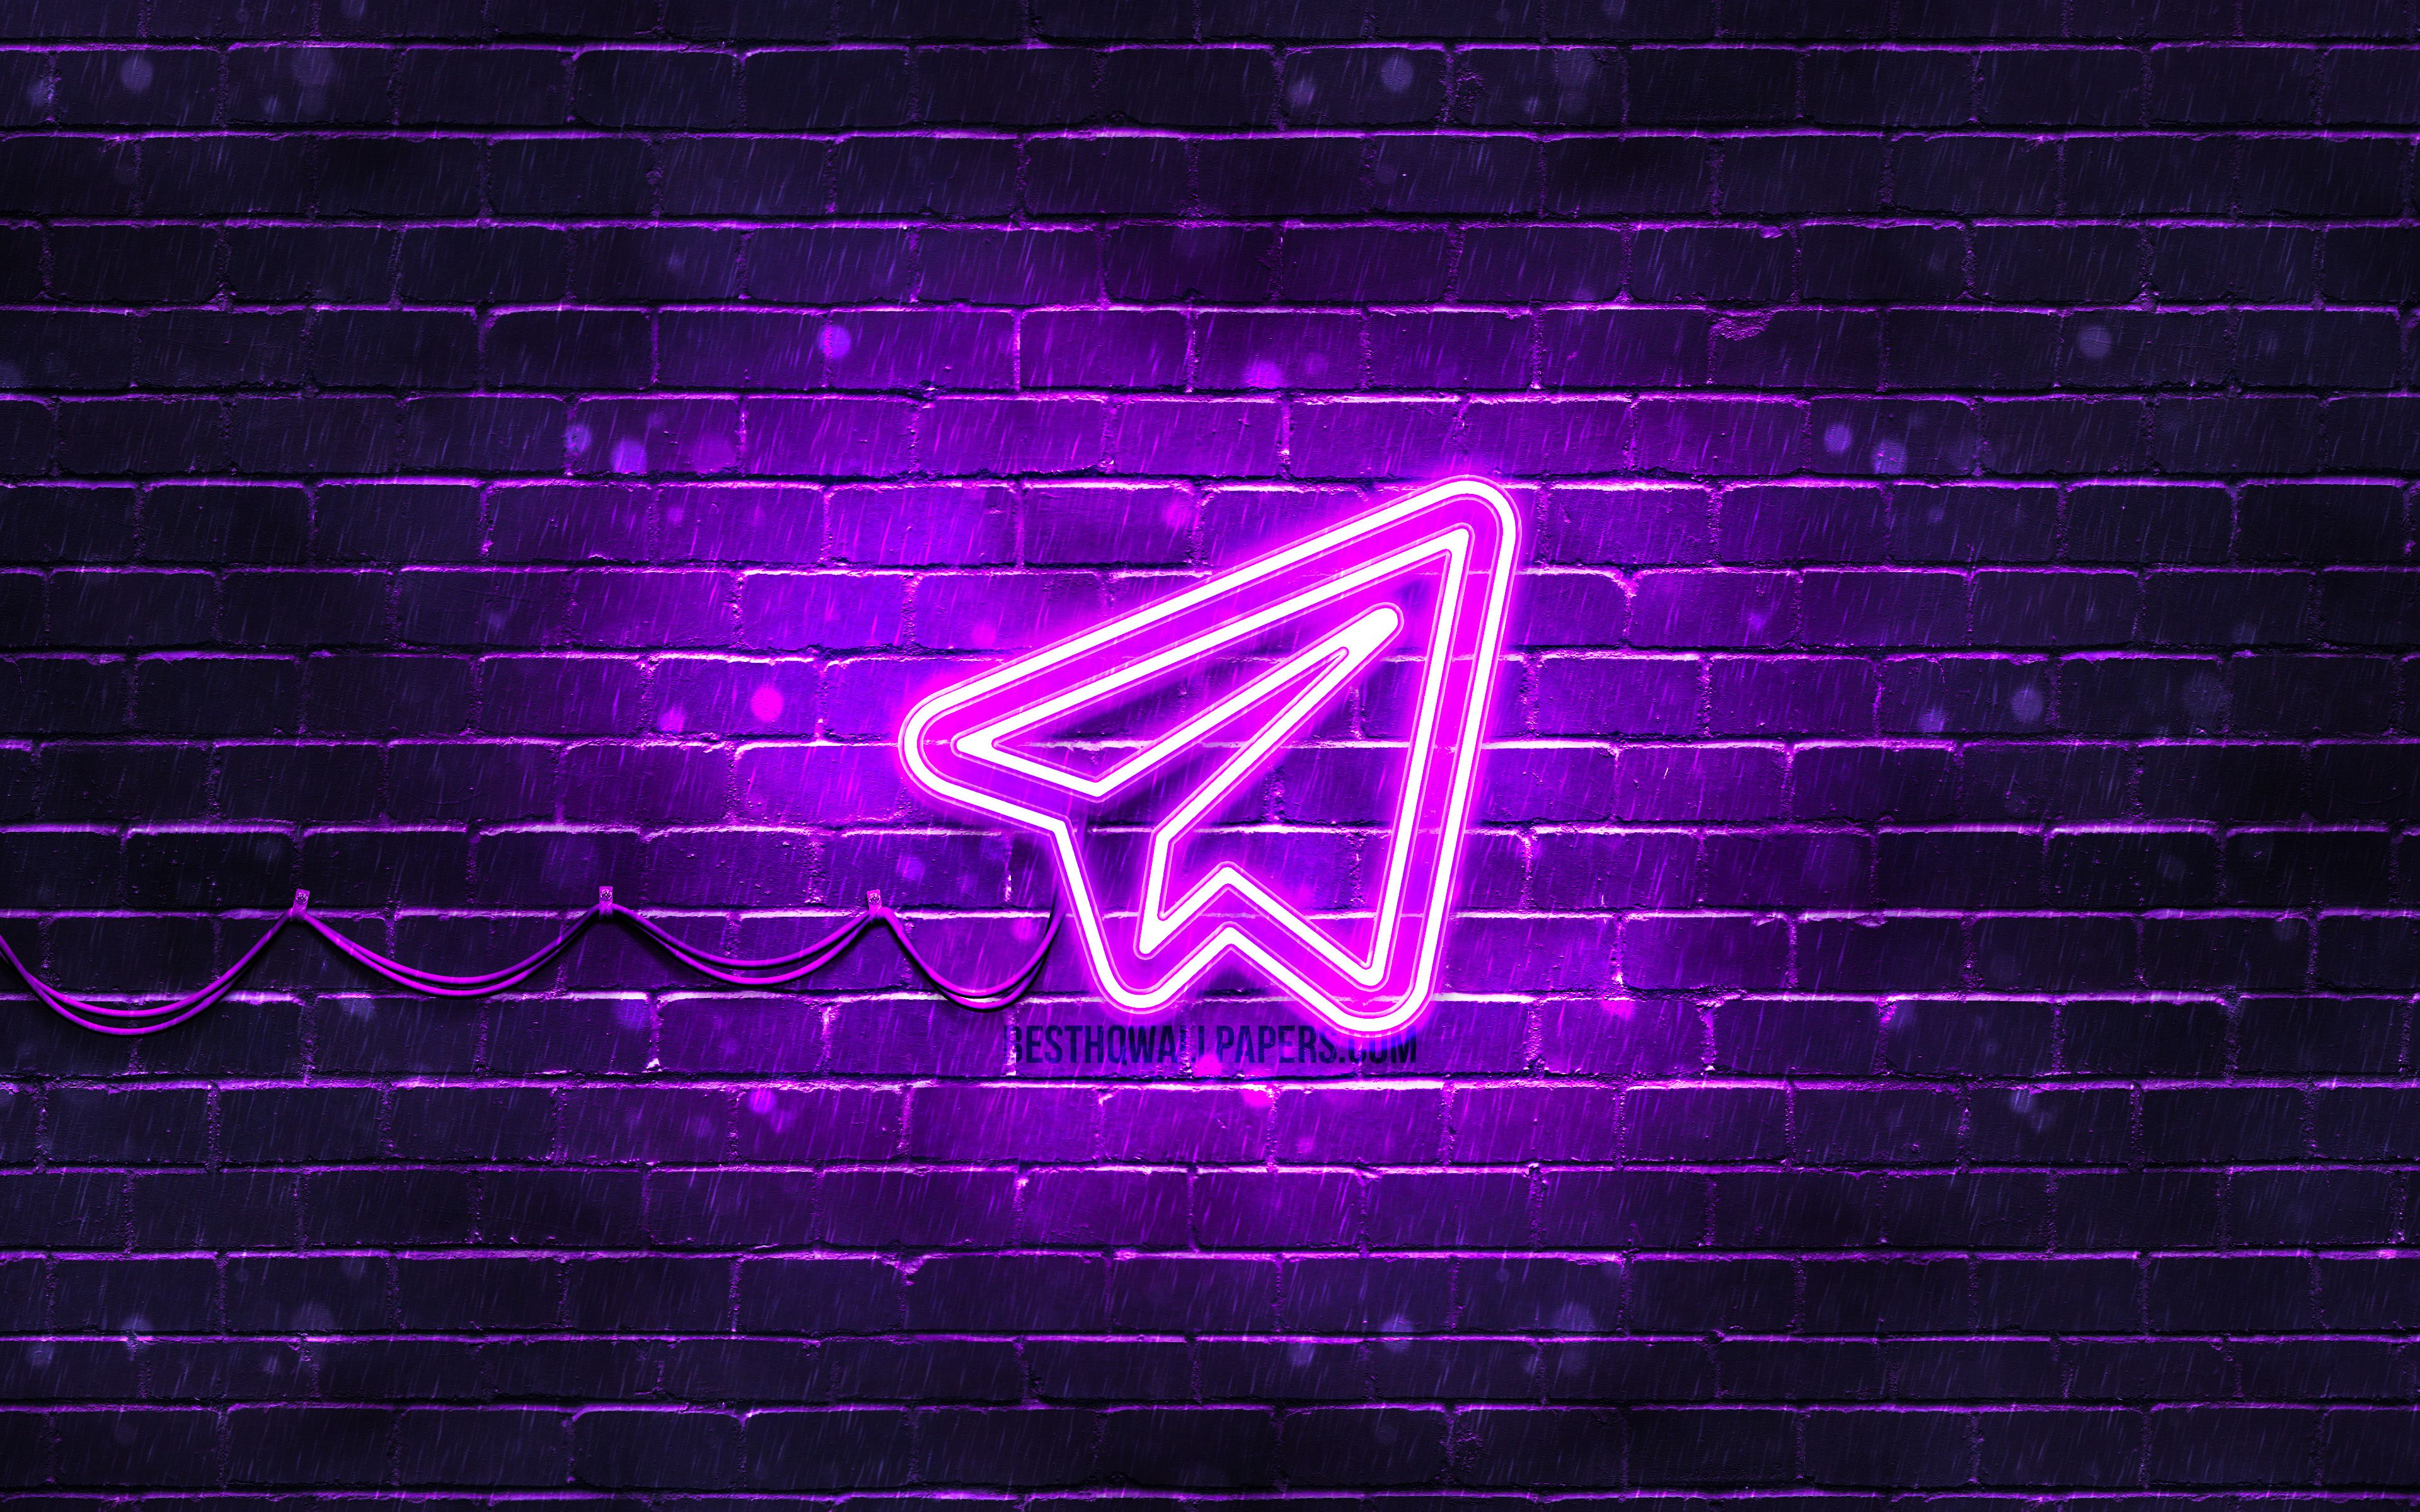 Download wallpaper Telegram violet logo, 4k, violet brickwall, Telegram logo, social networks, Telegram neon logo, Telegram for desktop with resolution 3840x2400. High Quality HD picture wallpaper